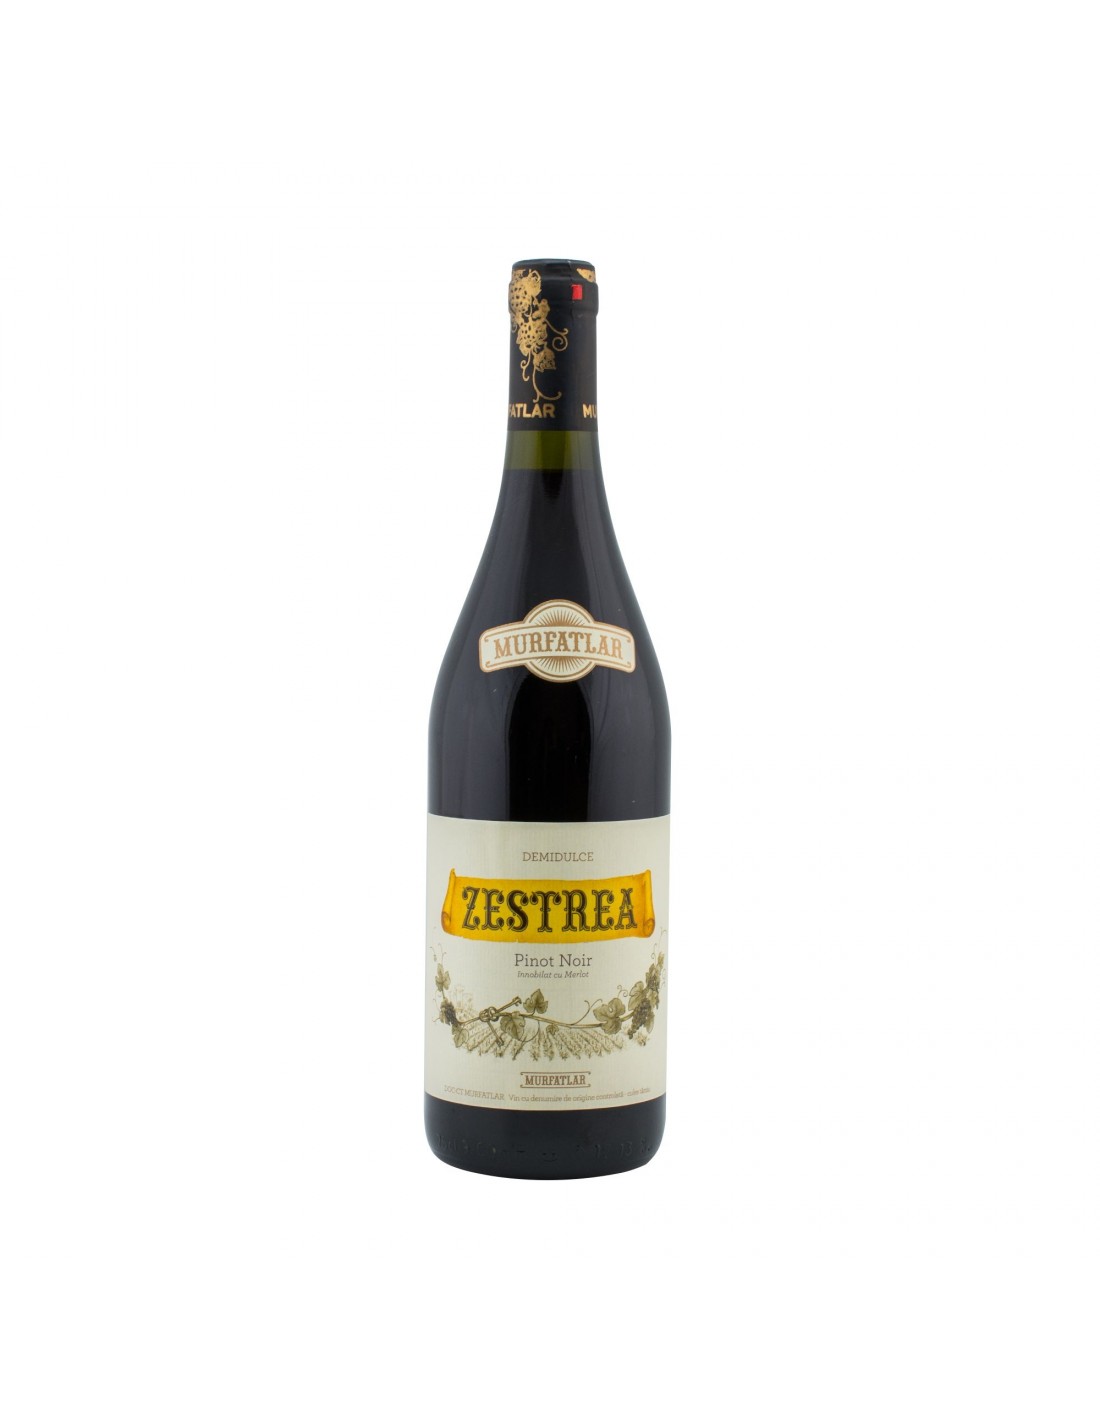 Vin rosu demidulce, Pinot Noir, Zestrea, 0.75L, 12.5% alc., Romania alcooldiscount.ro